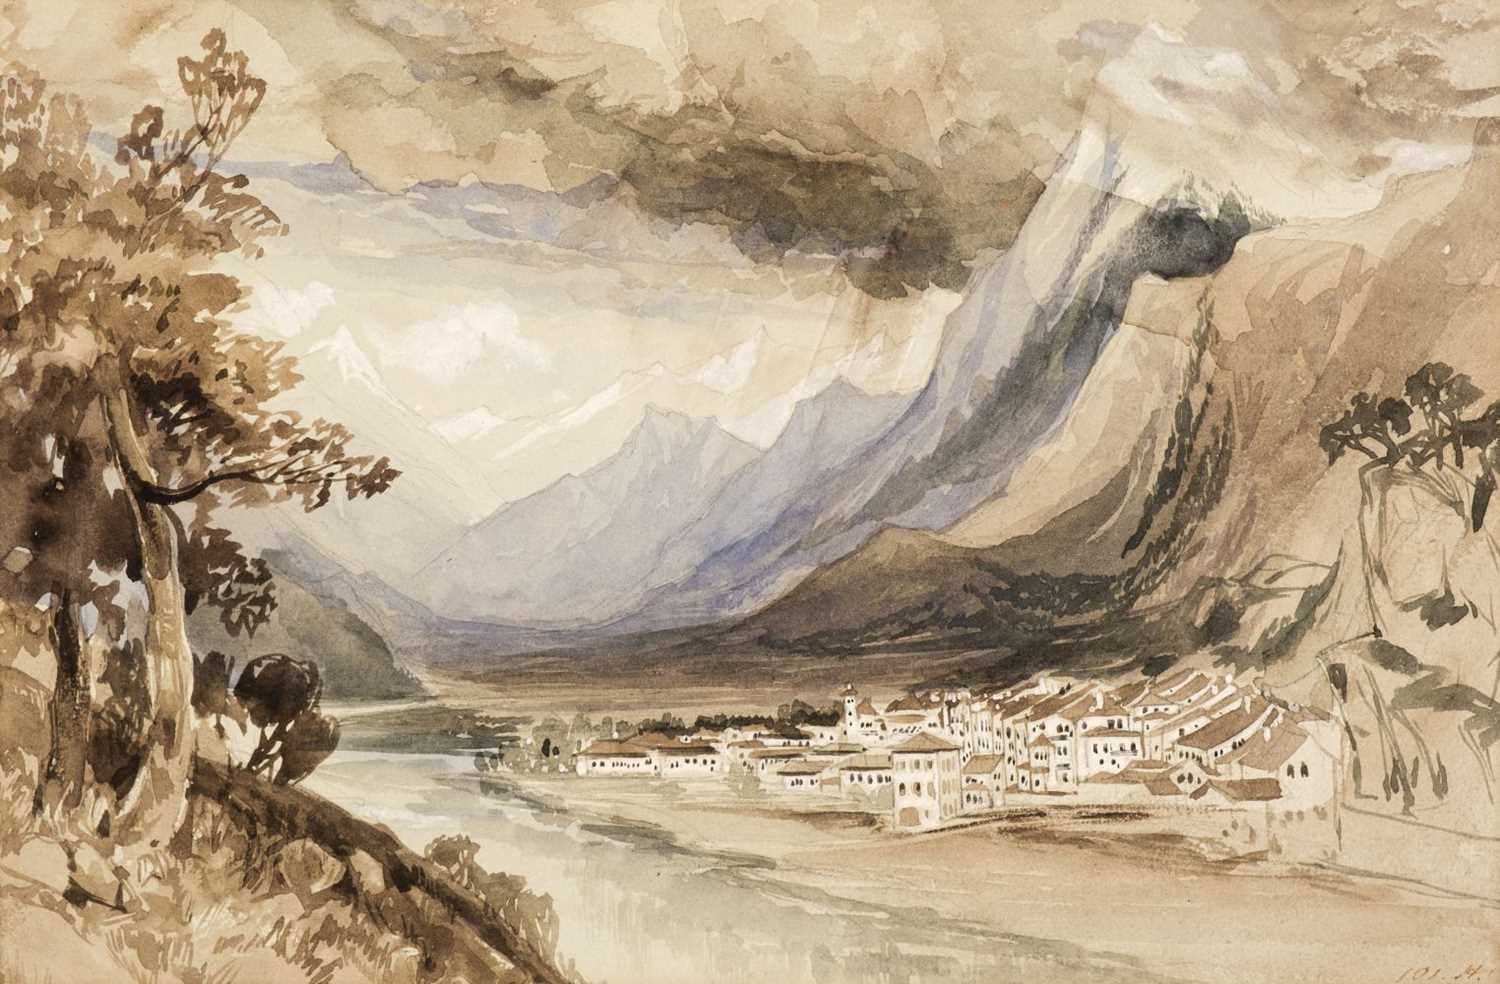 Lot 158 - Lear (Edward, 1812-1888). Saint Moritz, Switzerland, watercolour